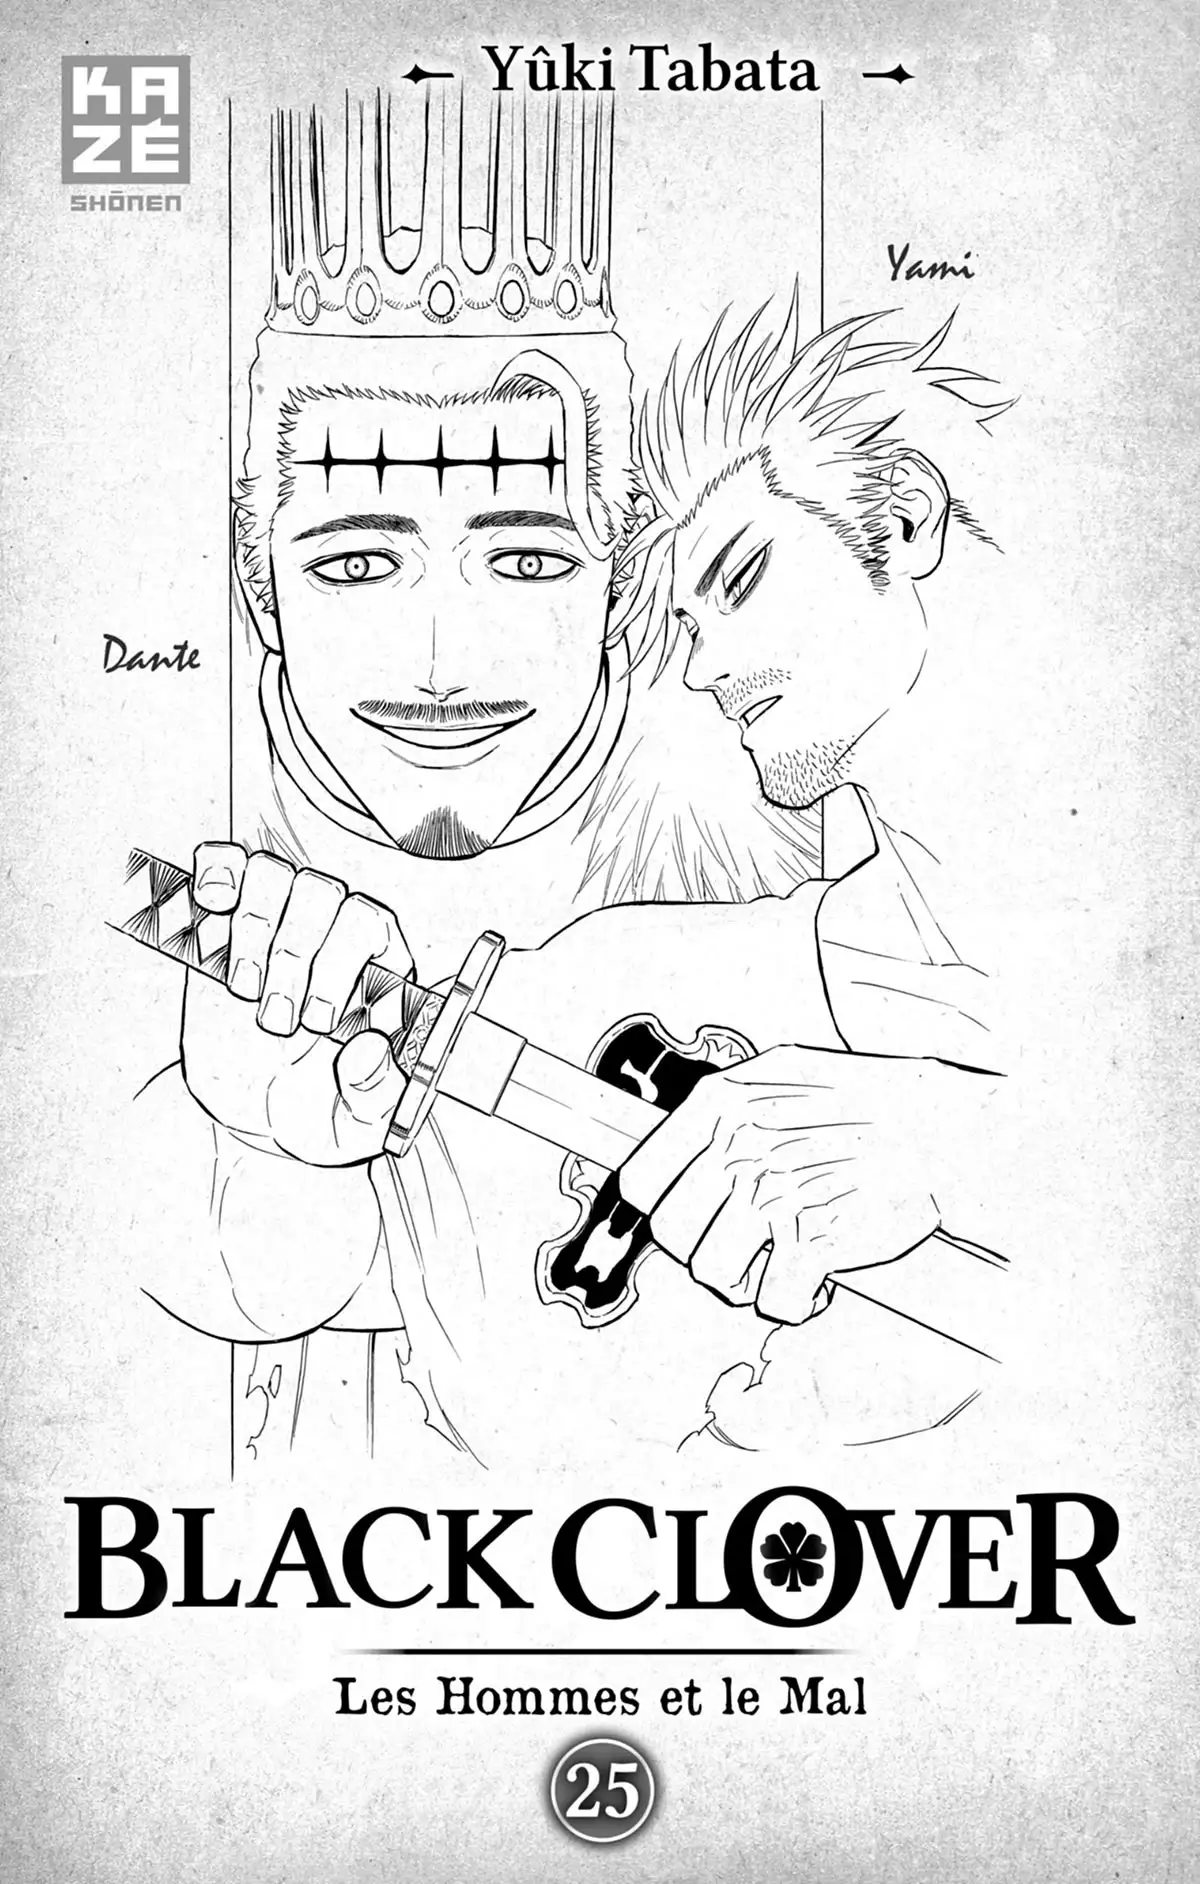 Black Clover Volume 25 page 2